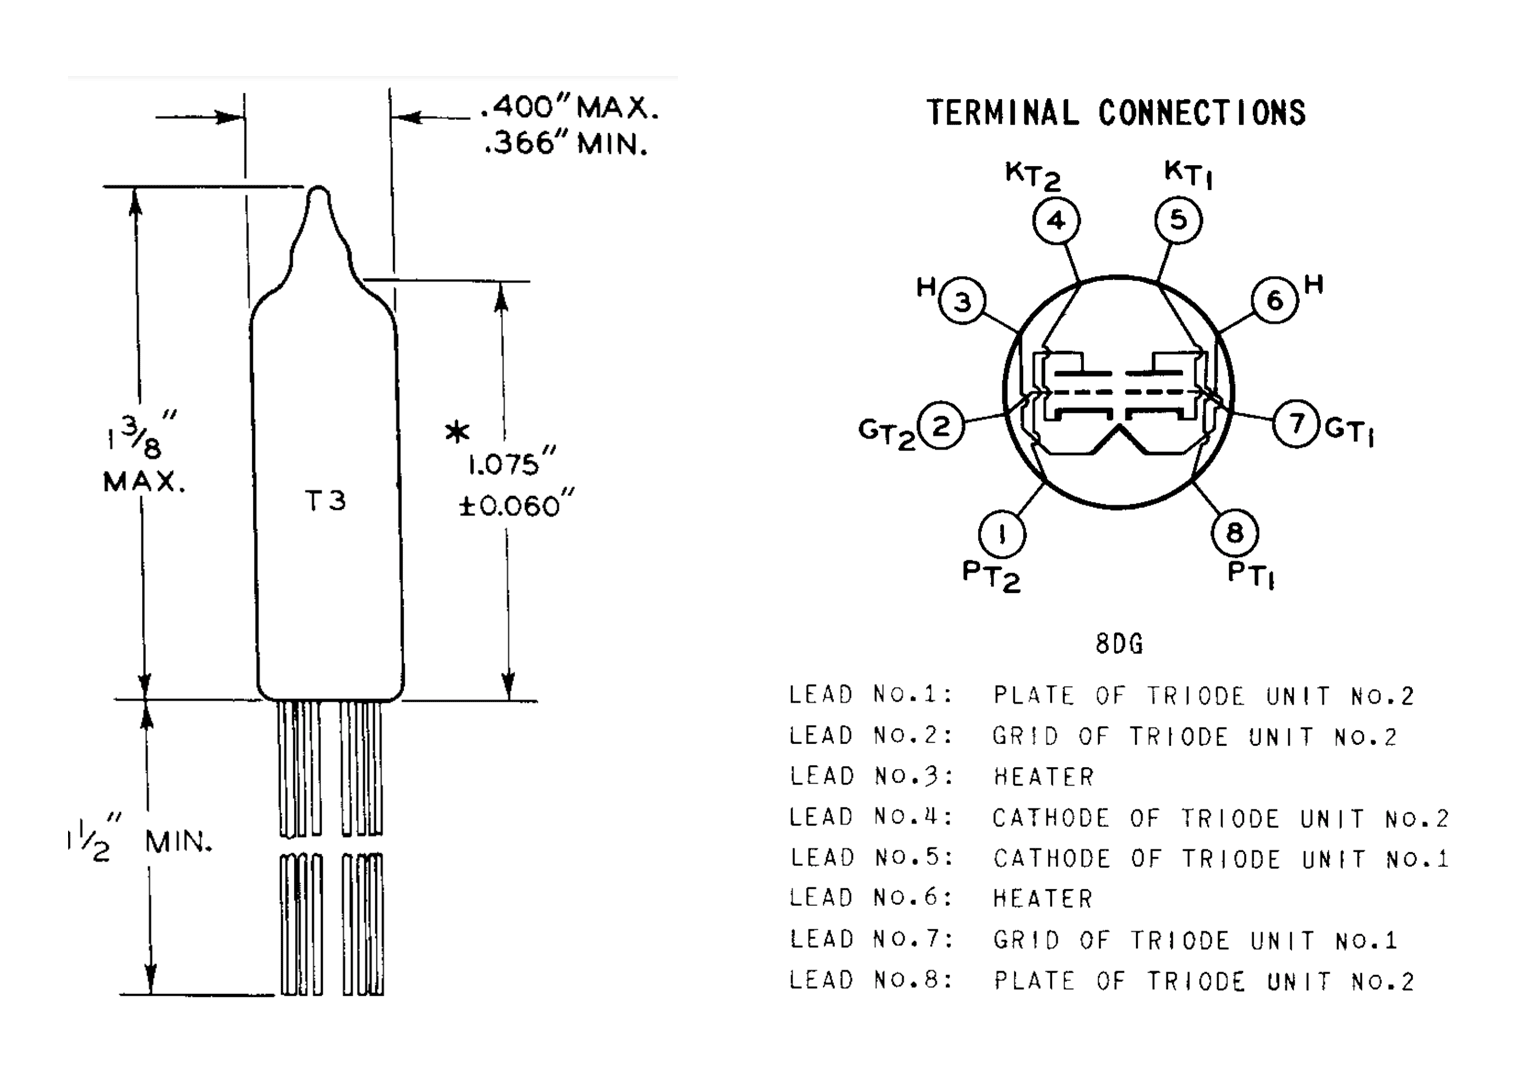 6111 Vacuum Tube Diagram. Source: RCA